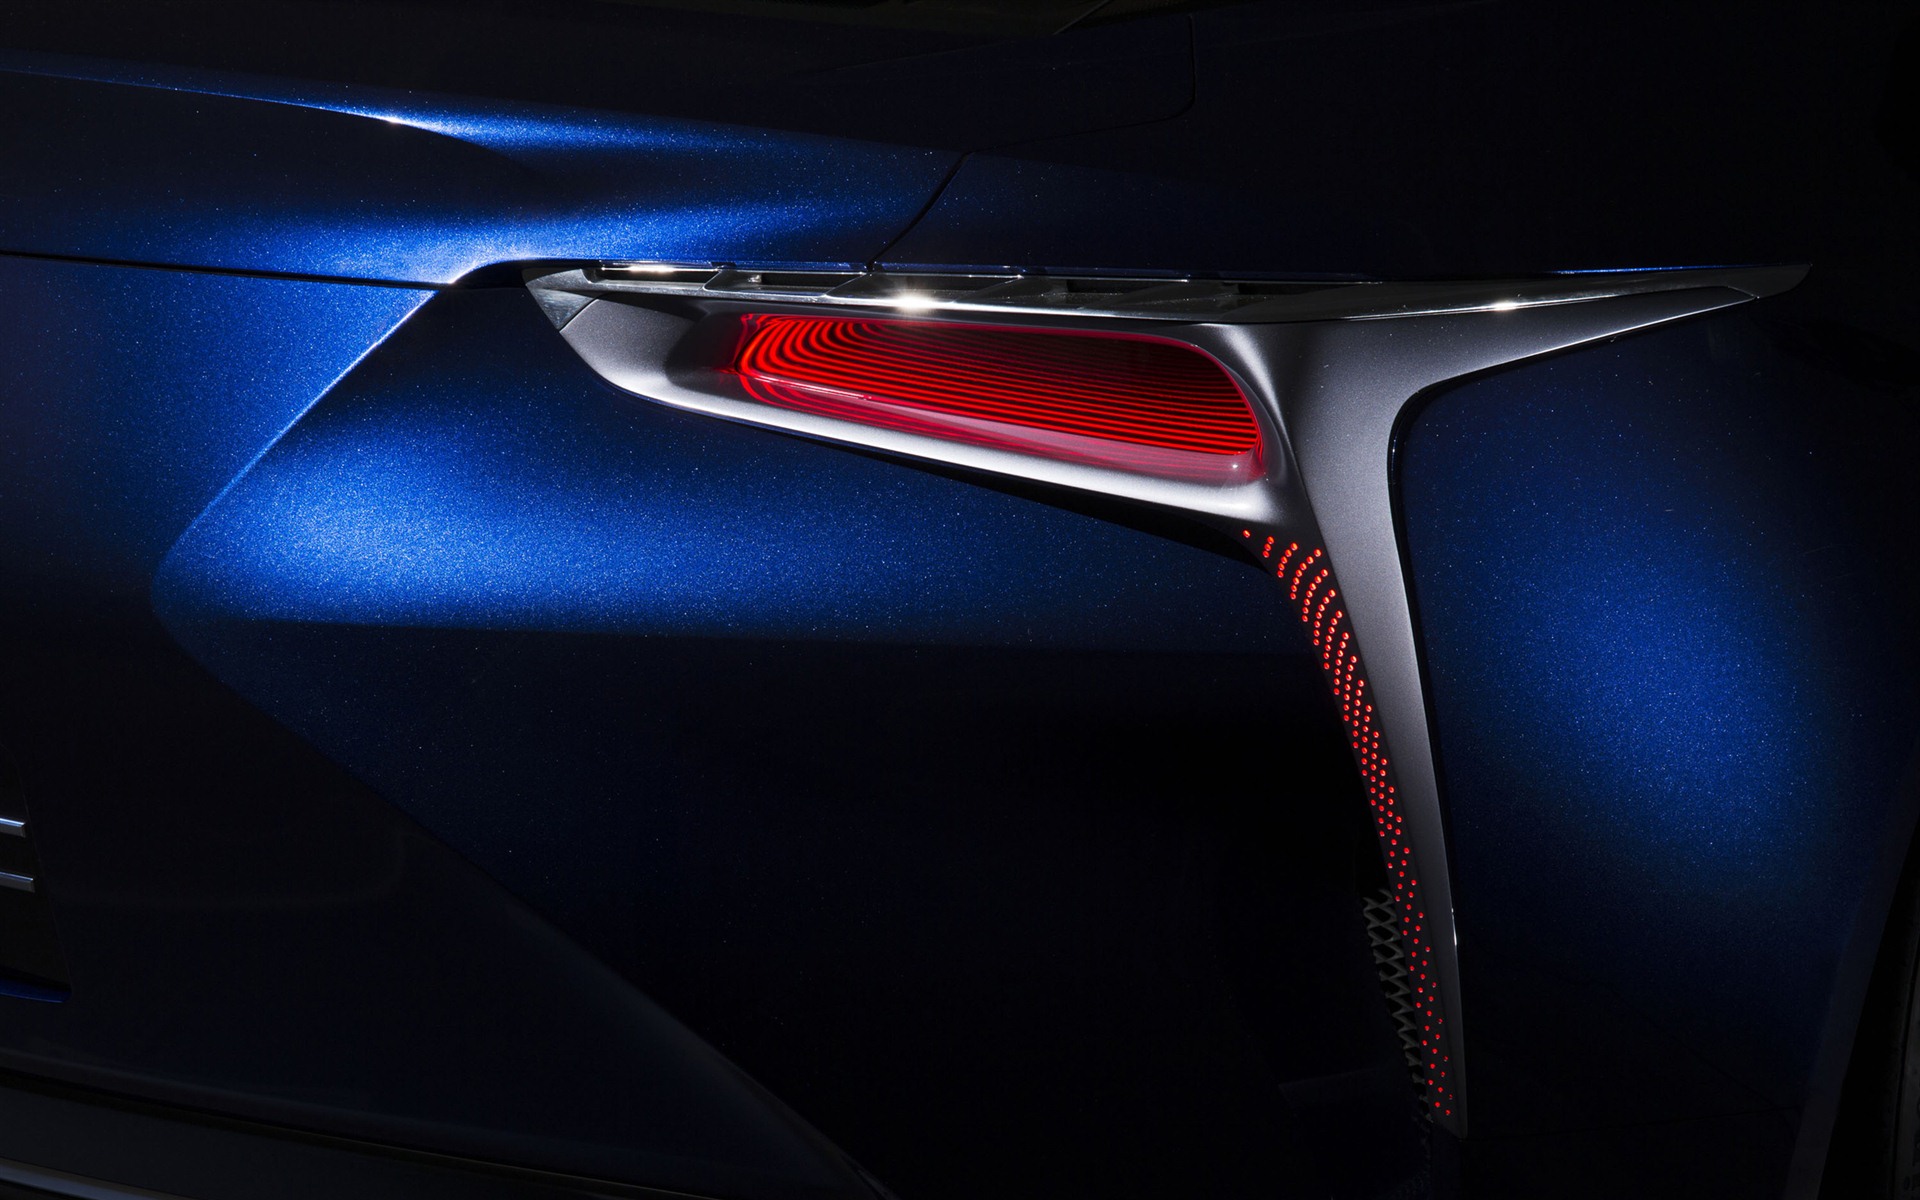 2012 Lexus LF-LC Blue concept 雷克萨斯 蓝色概念车 高清壁纸13 - 1920x1200